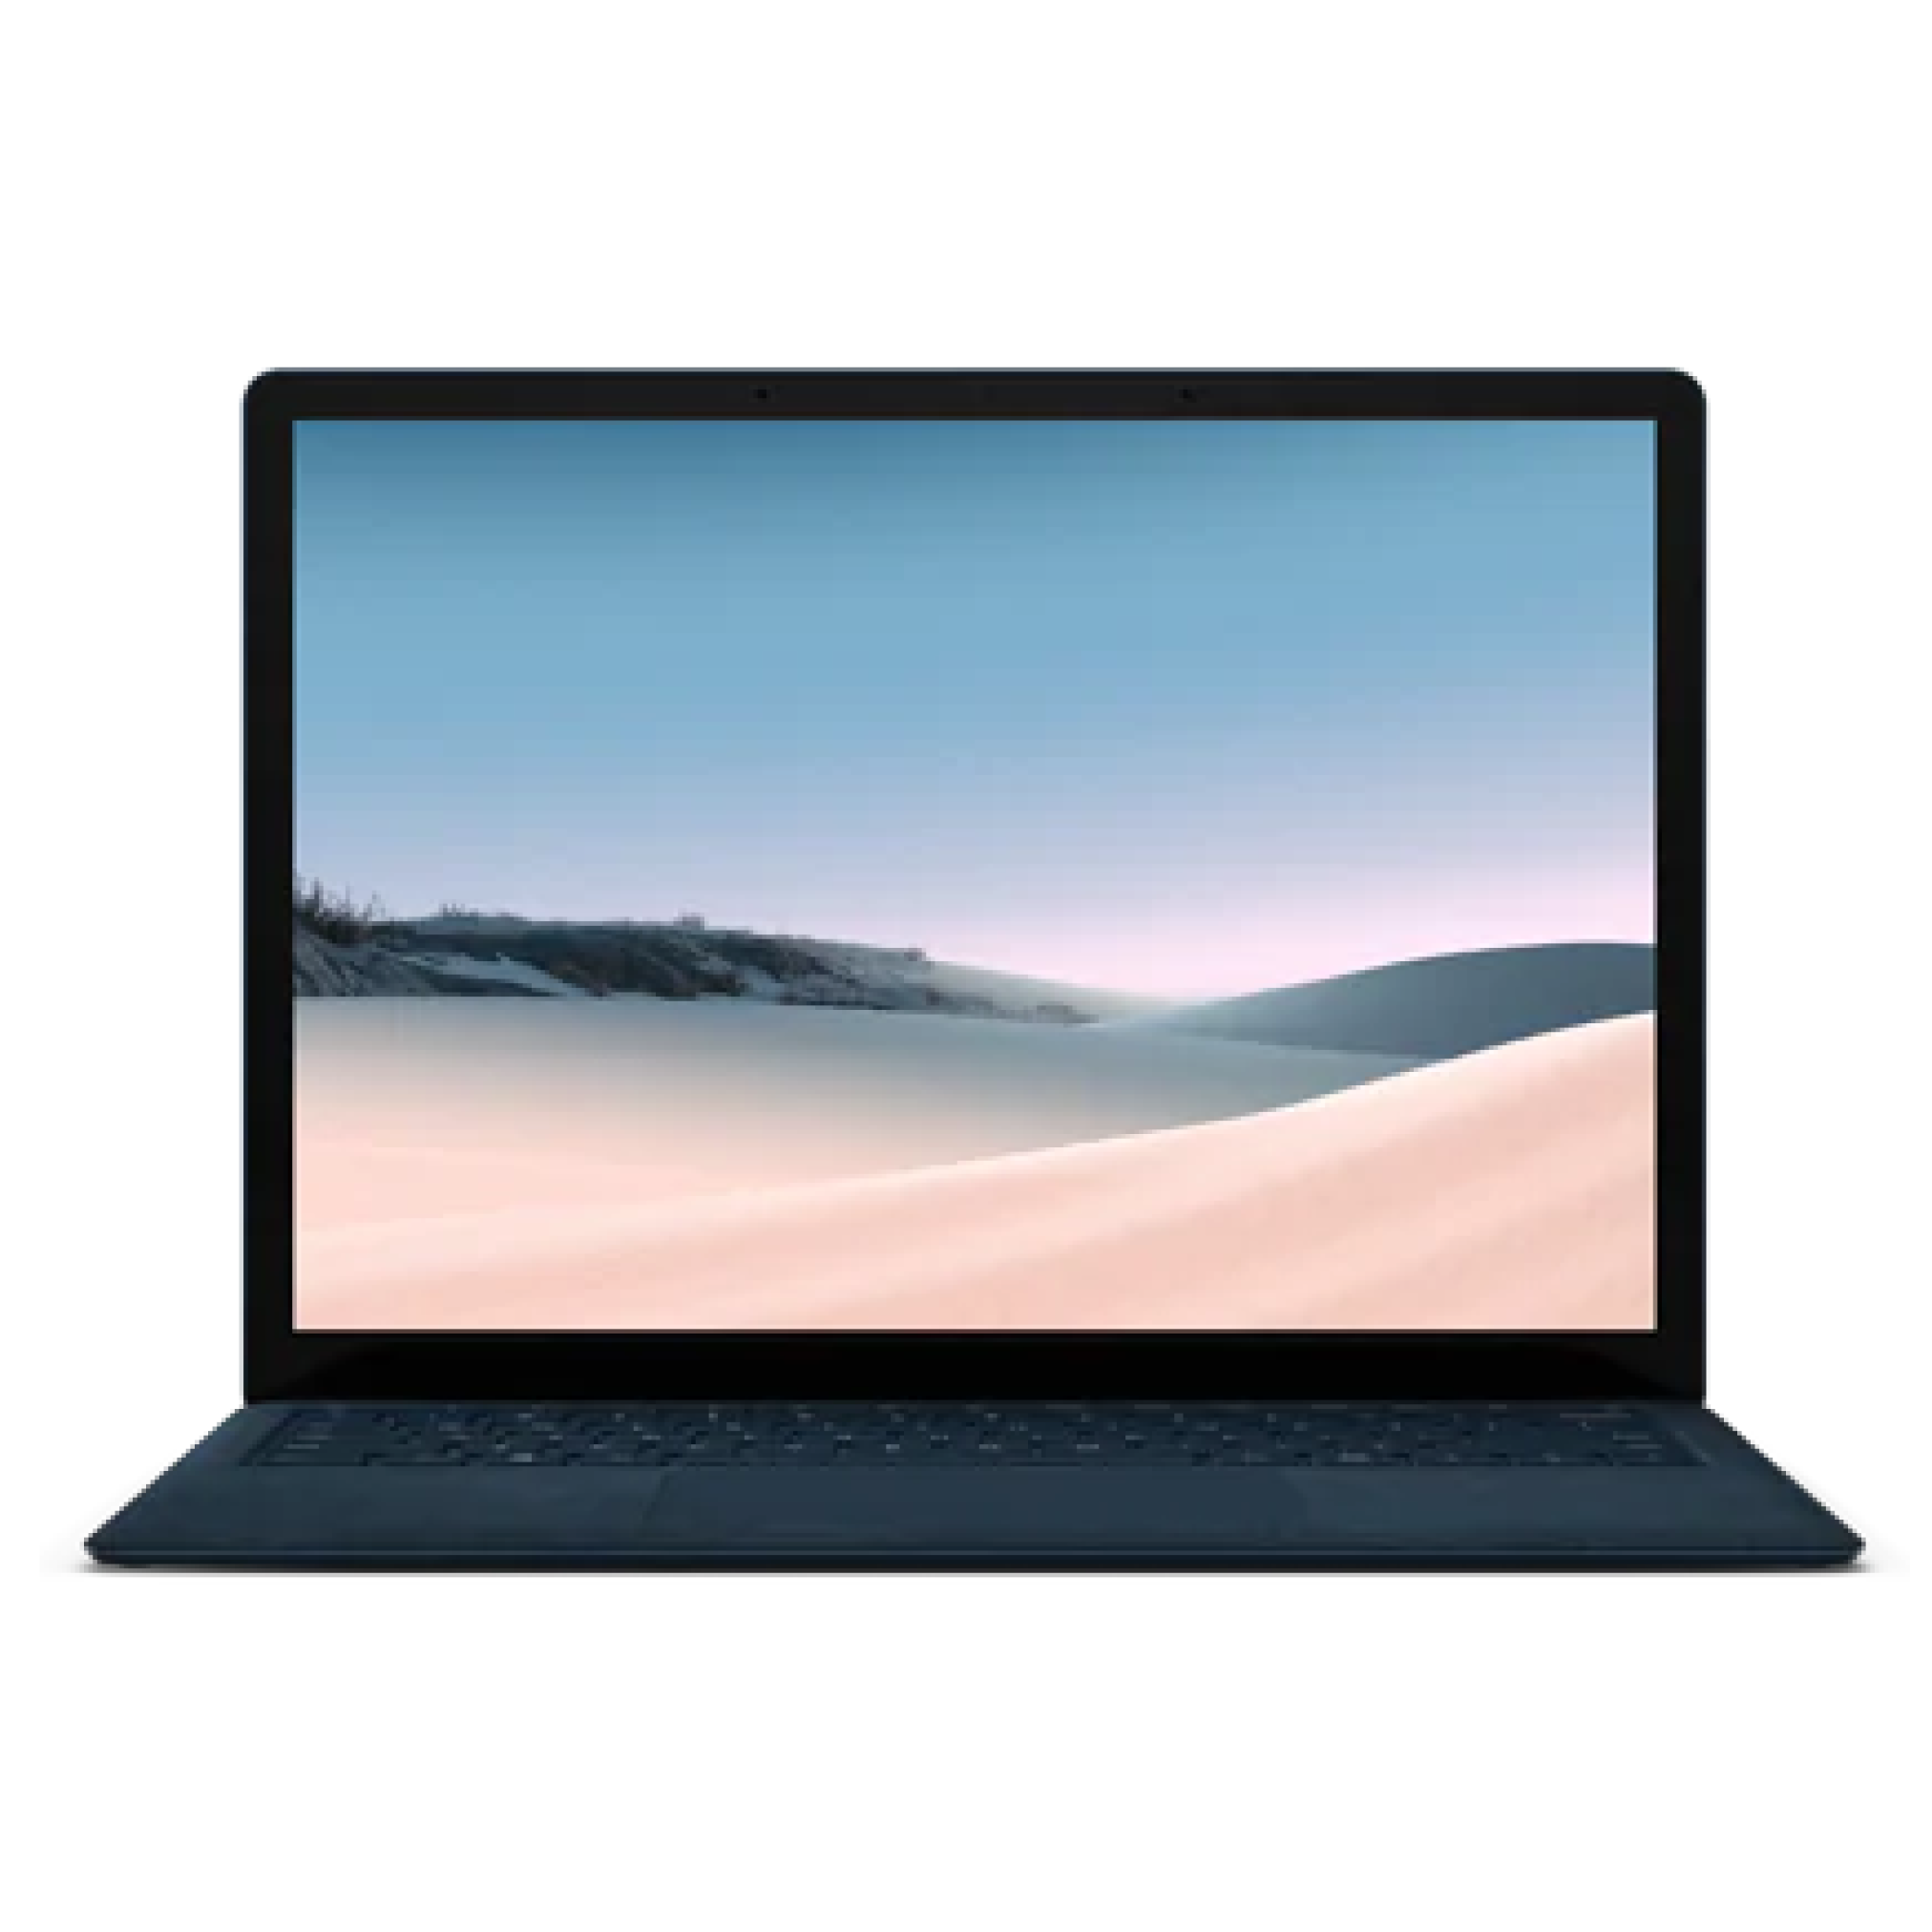 Microsoft Surface Laptop 3 13.5″ - Windows 10 Pro - Intel Core i5-1035G7 - 8 GB RAM - 256 GB